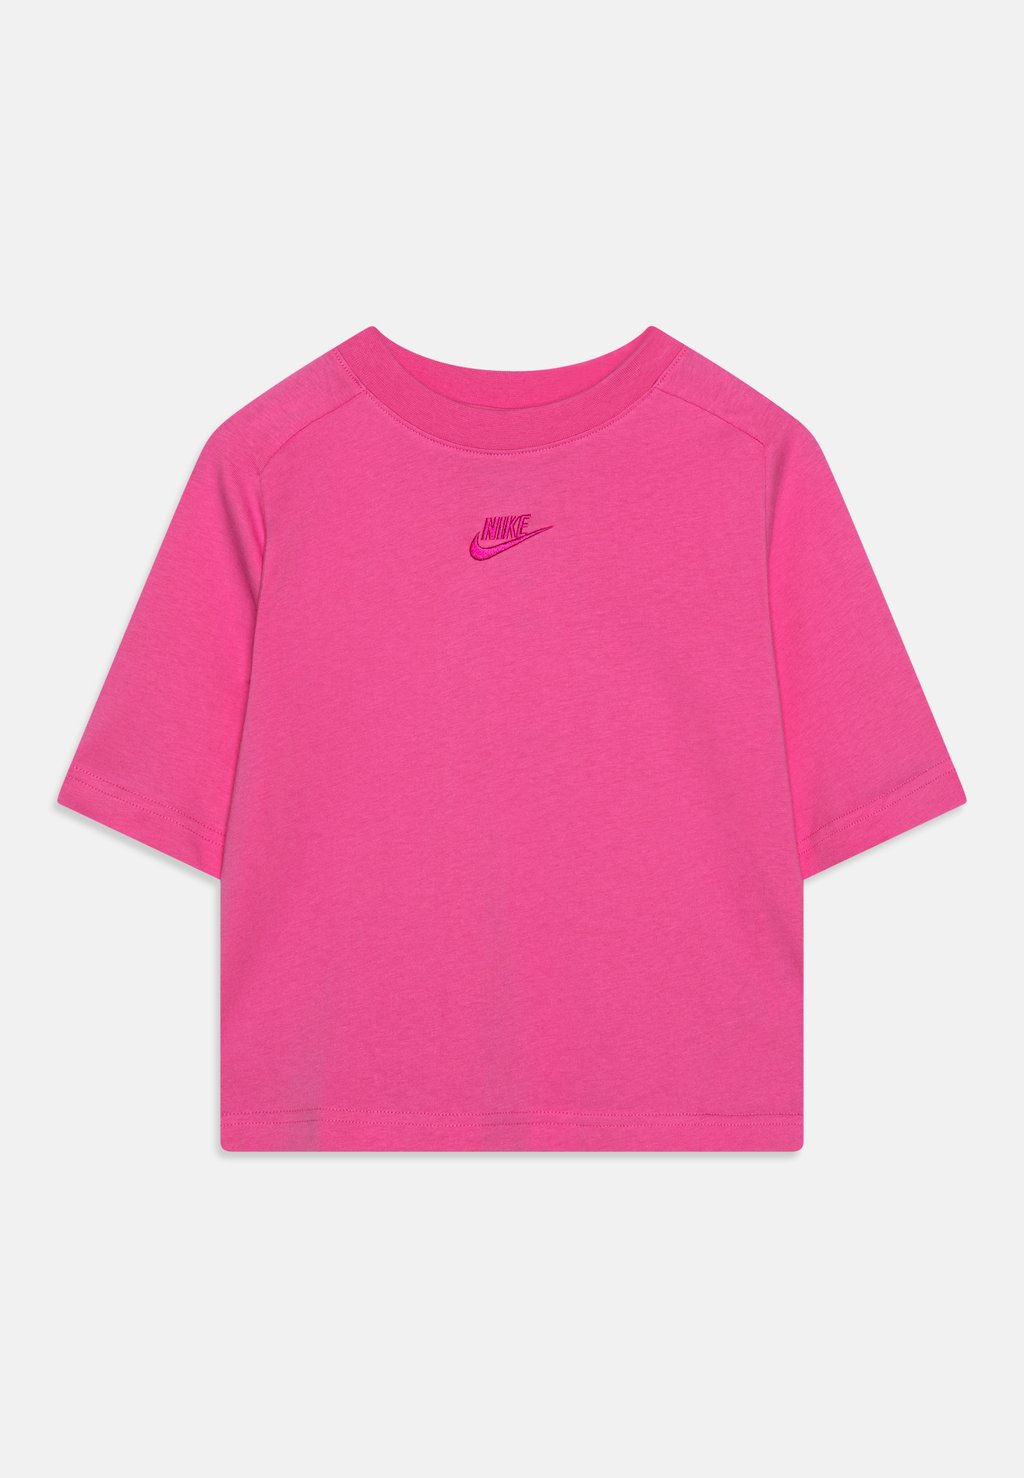 Футболка базовая Nike Sportswear, цвет playful pink/active fuchsia леггинсы universa nike цвет playful pink